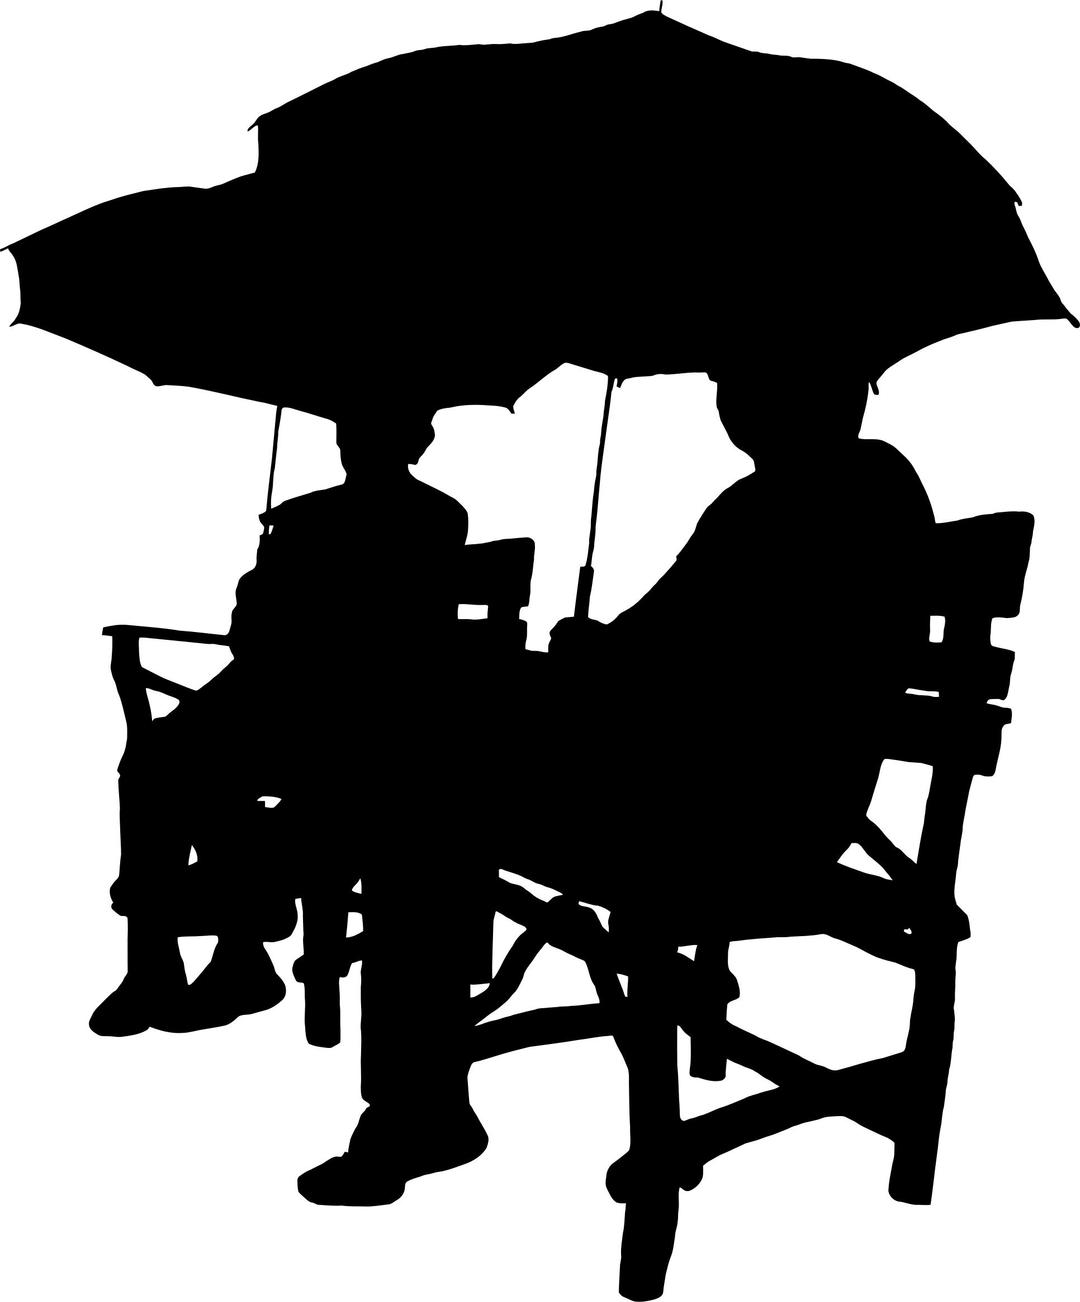 Sitting Under Umbrellas Silhouette png transparent